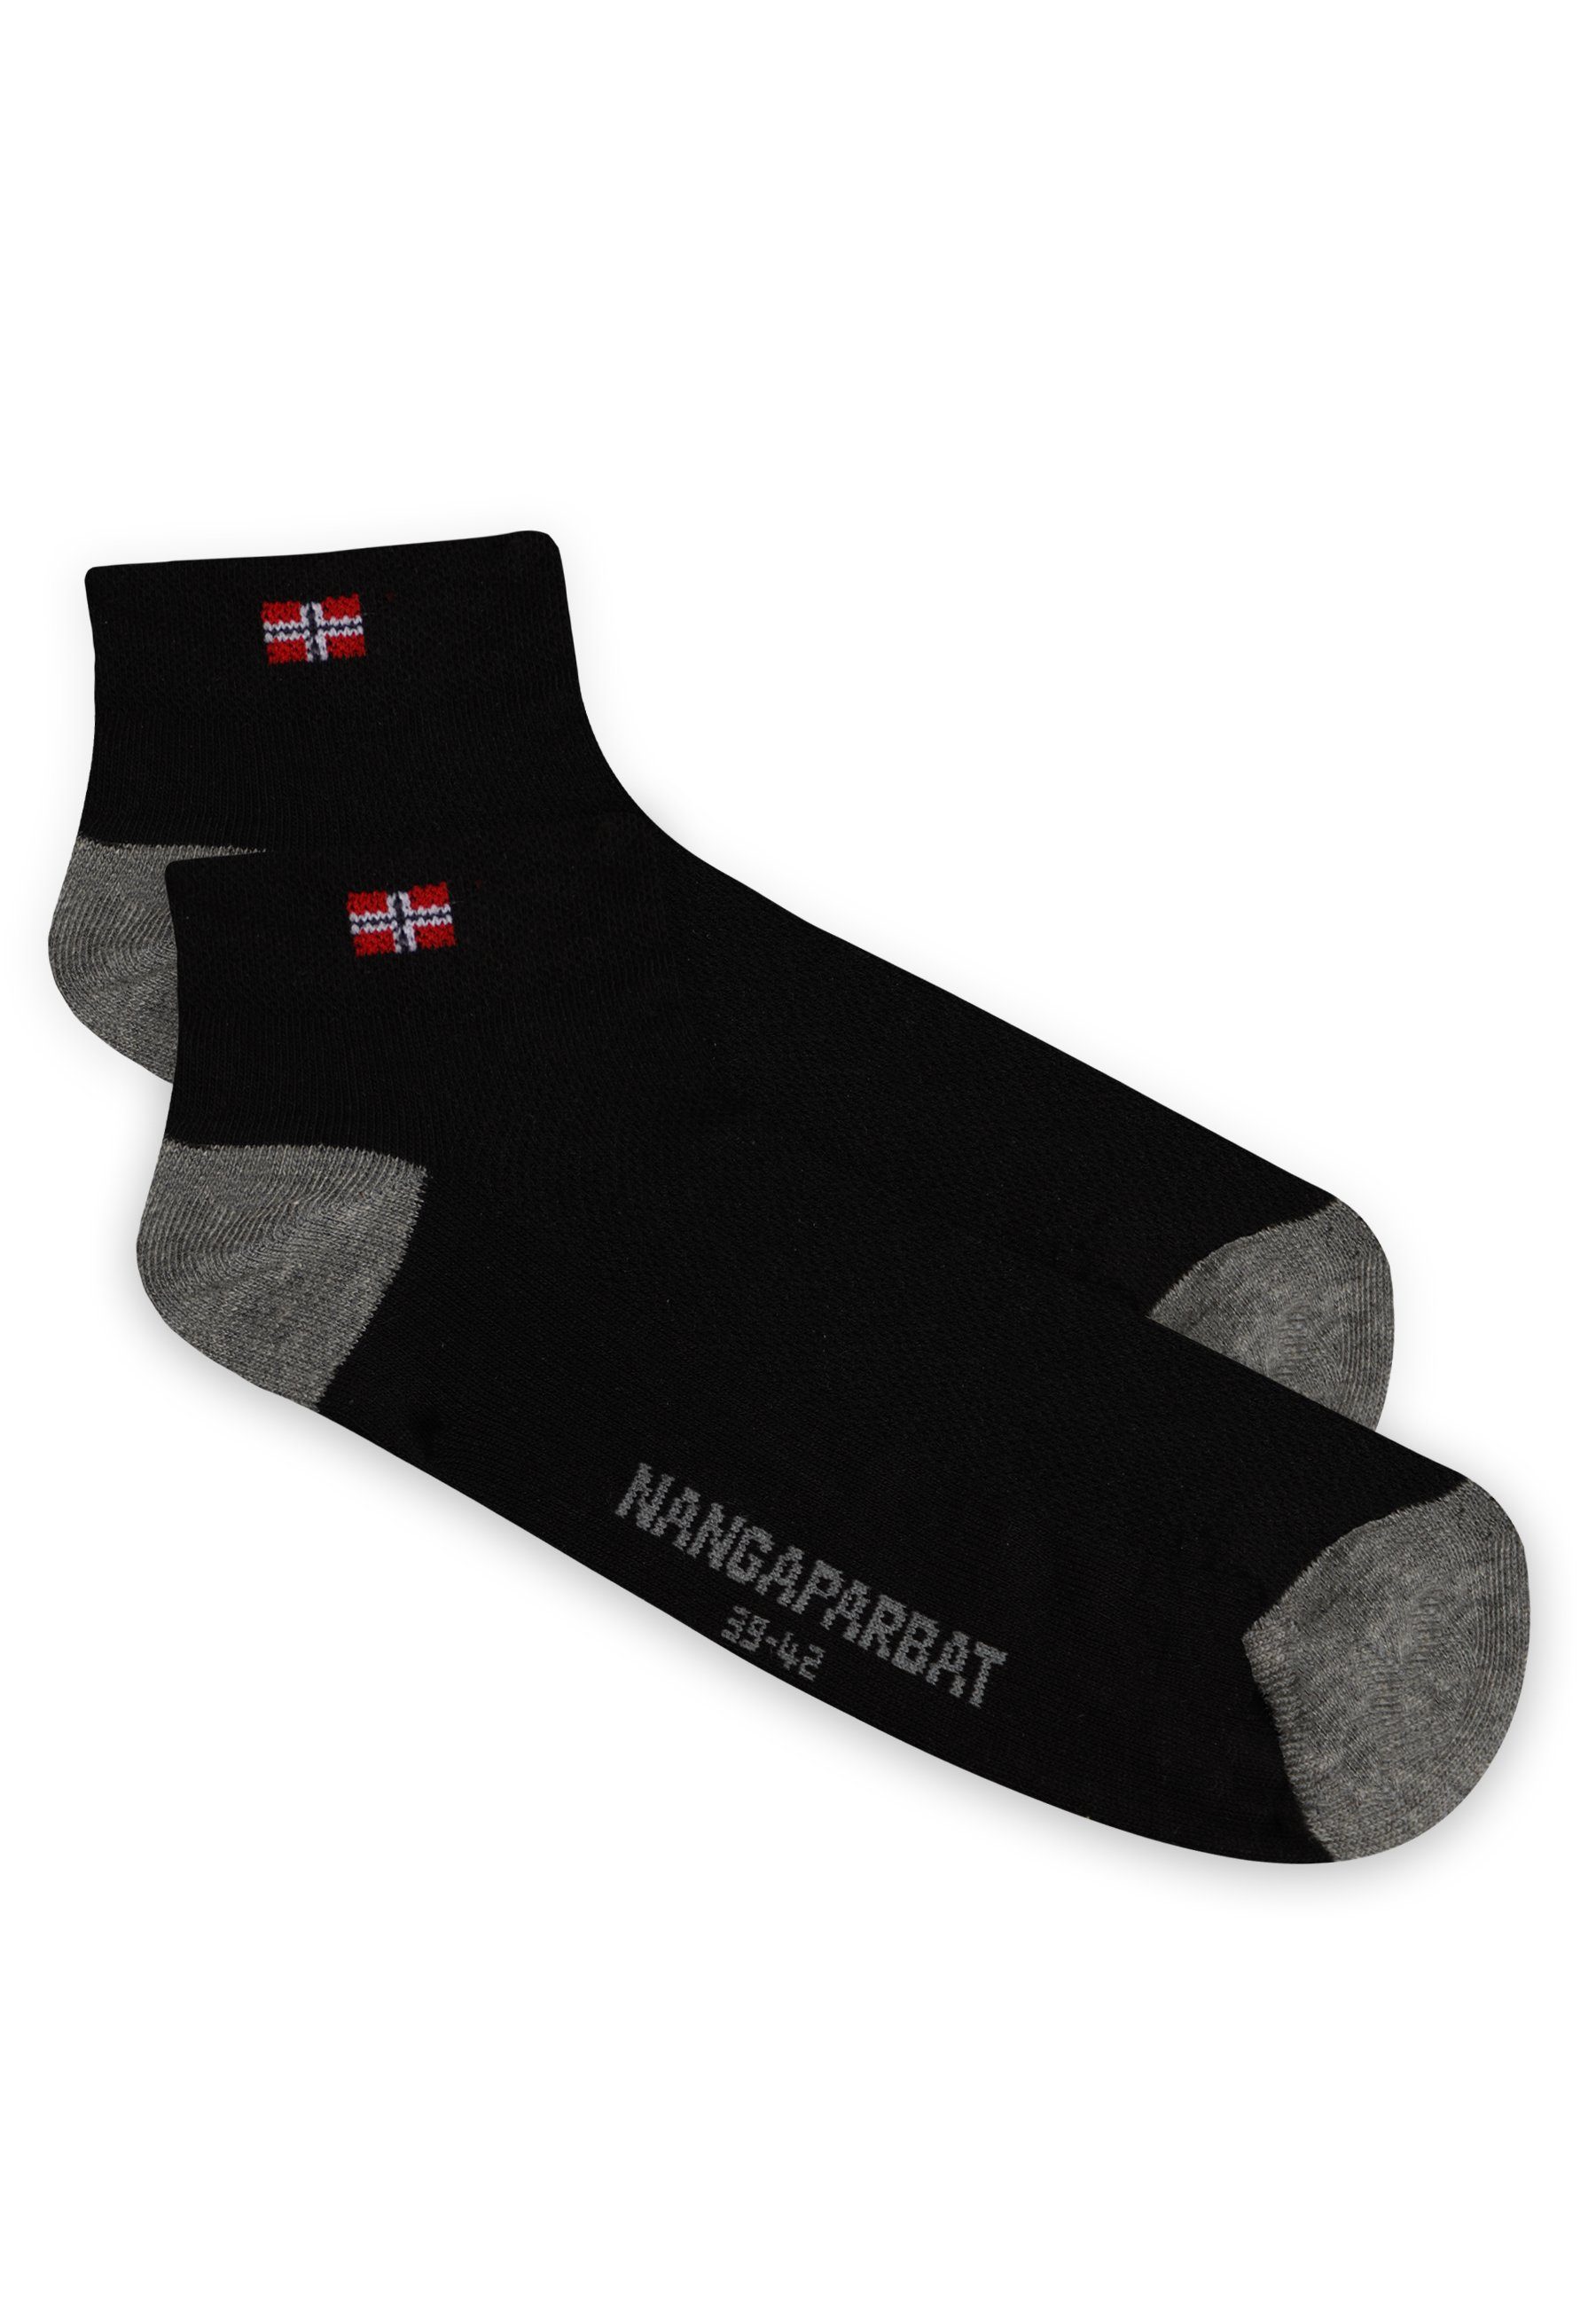 NANGAPARBAT schwarz Socken komfortabler mit Trittdämpfung